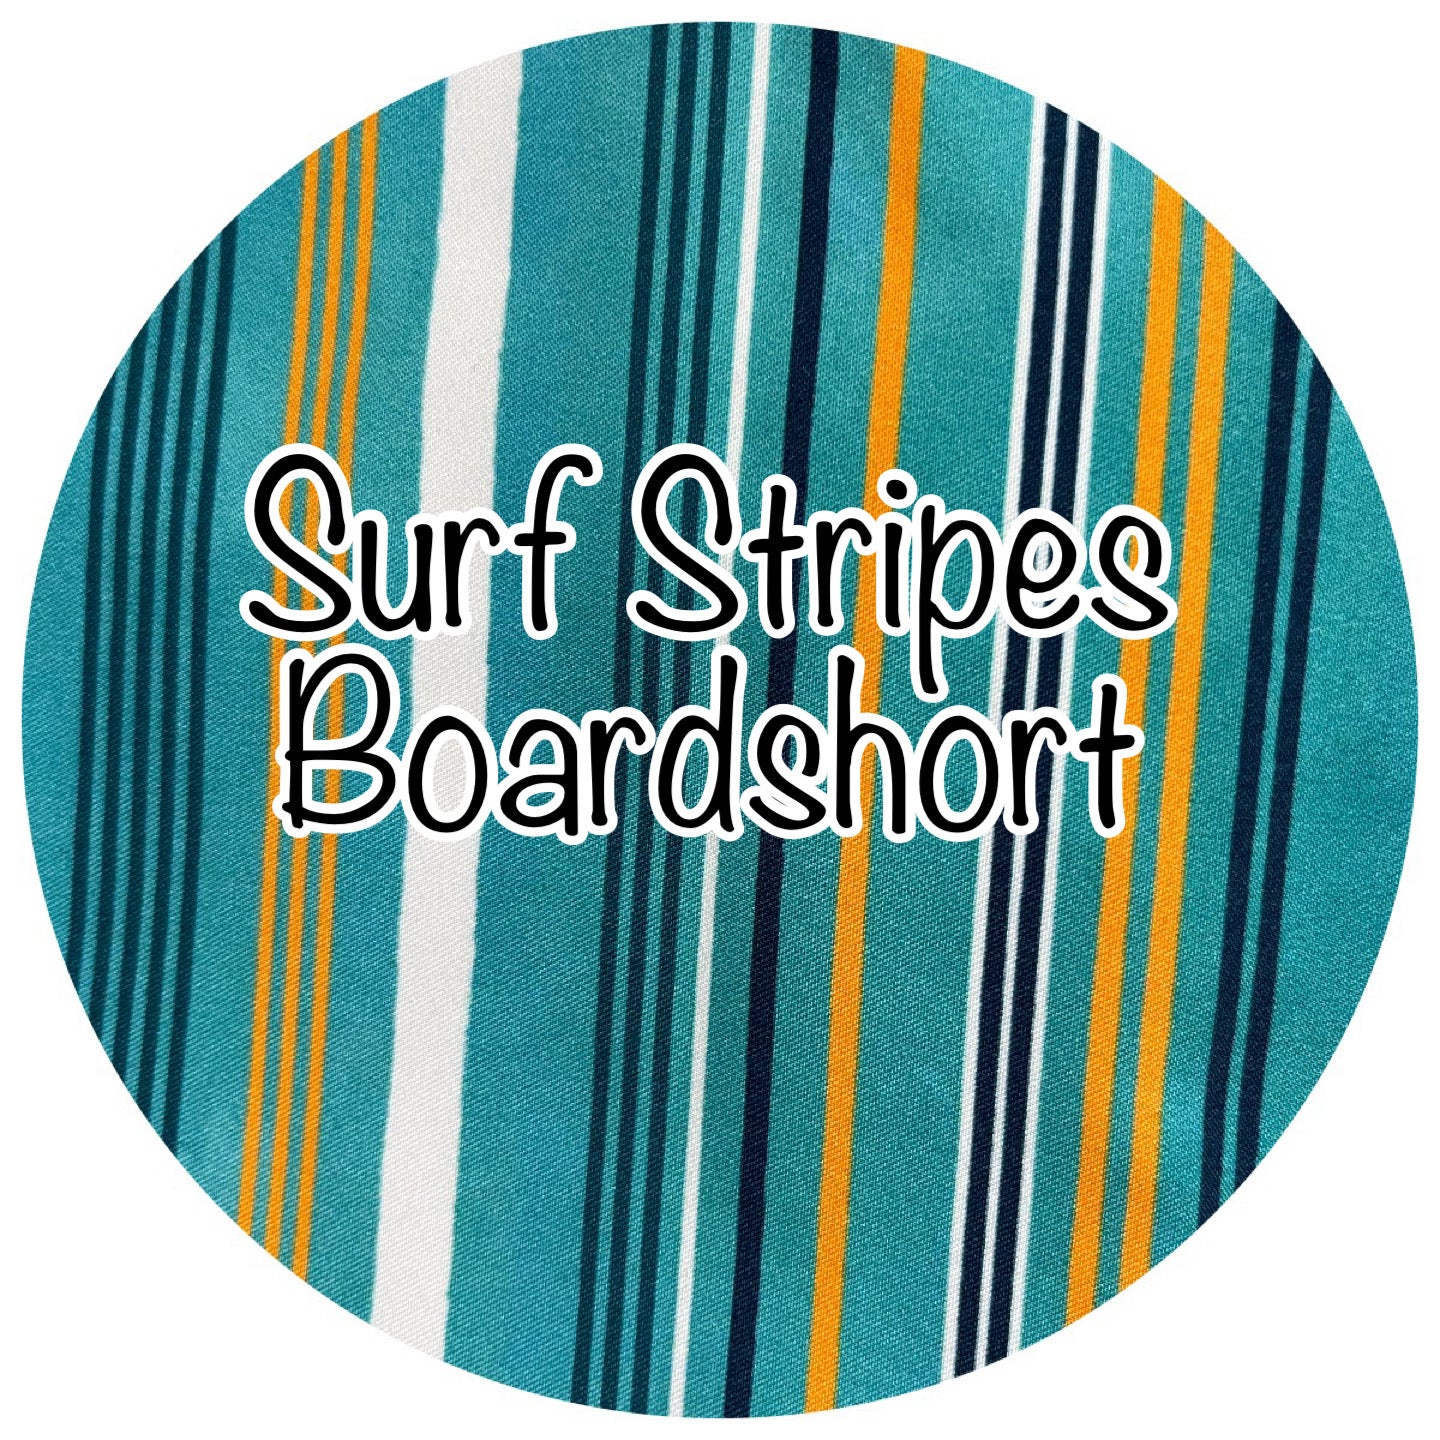 Surf Stripes Board Shorts